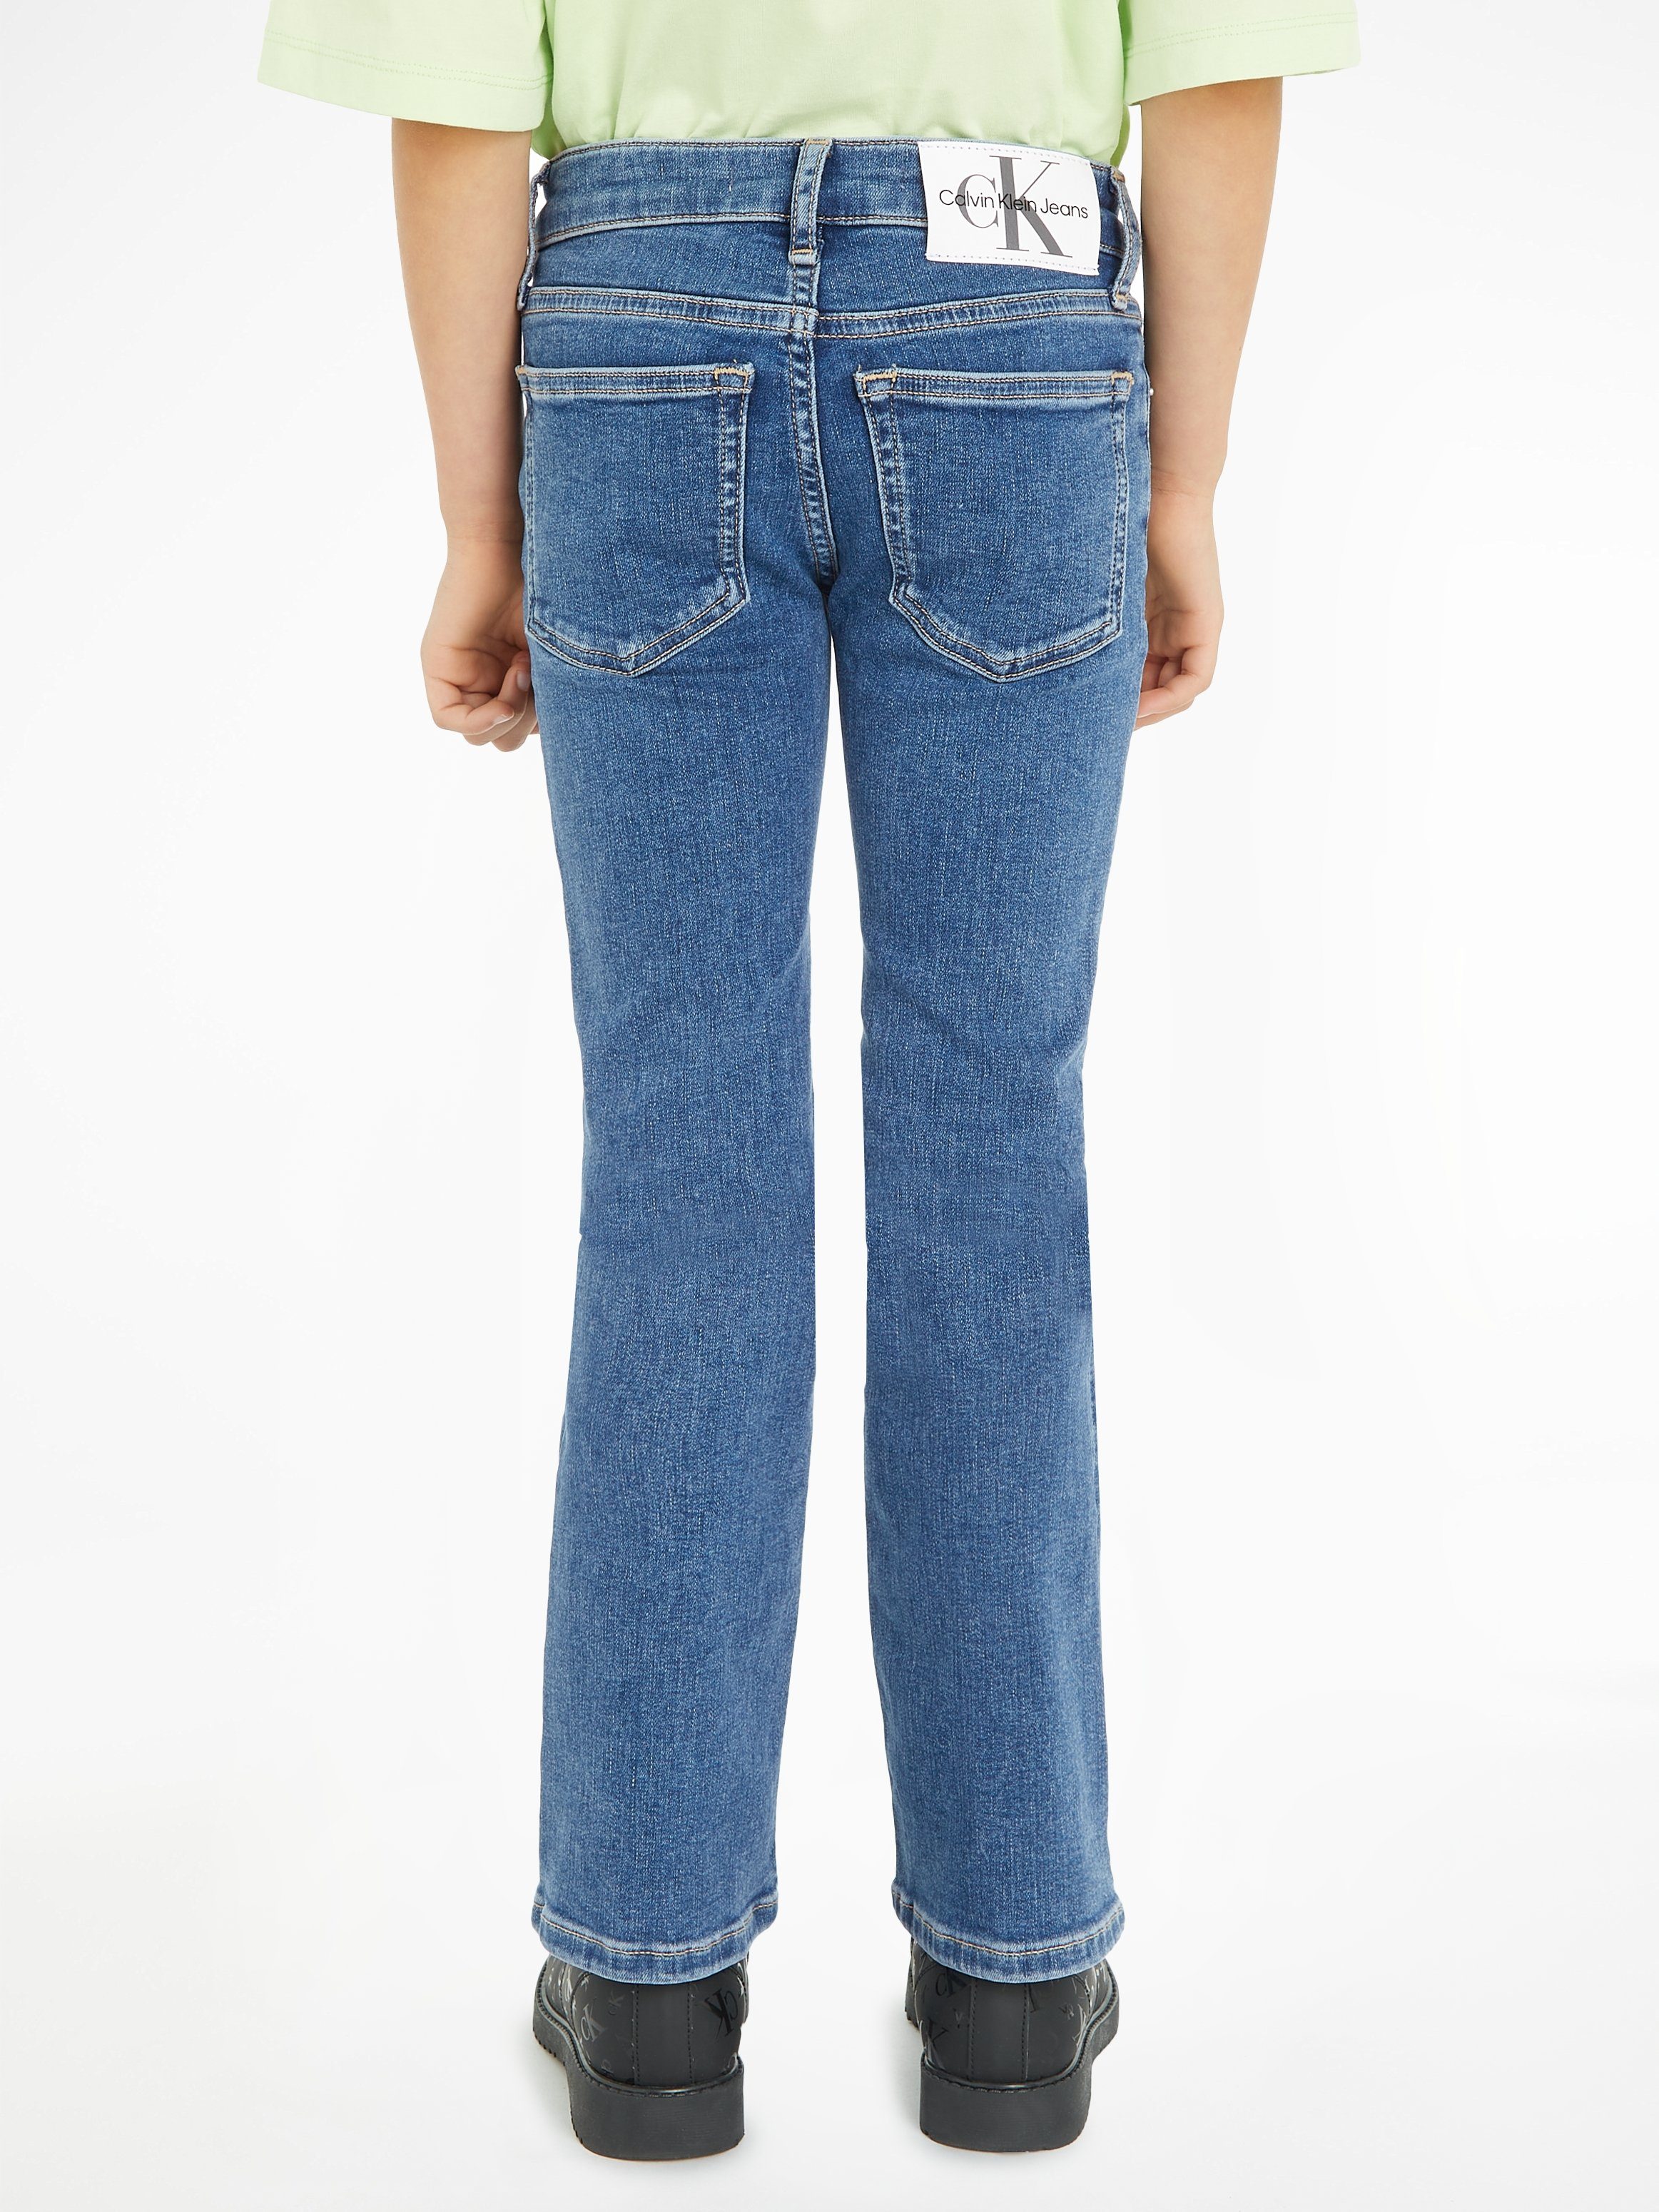 STRETCH Schlagjeans ESS Jeans BLUE Klein 5-Poket-Style Calvin im FLARE